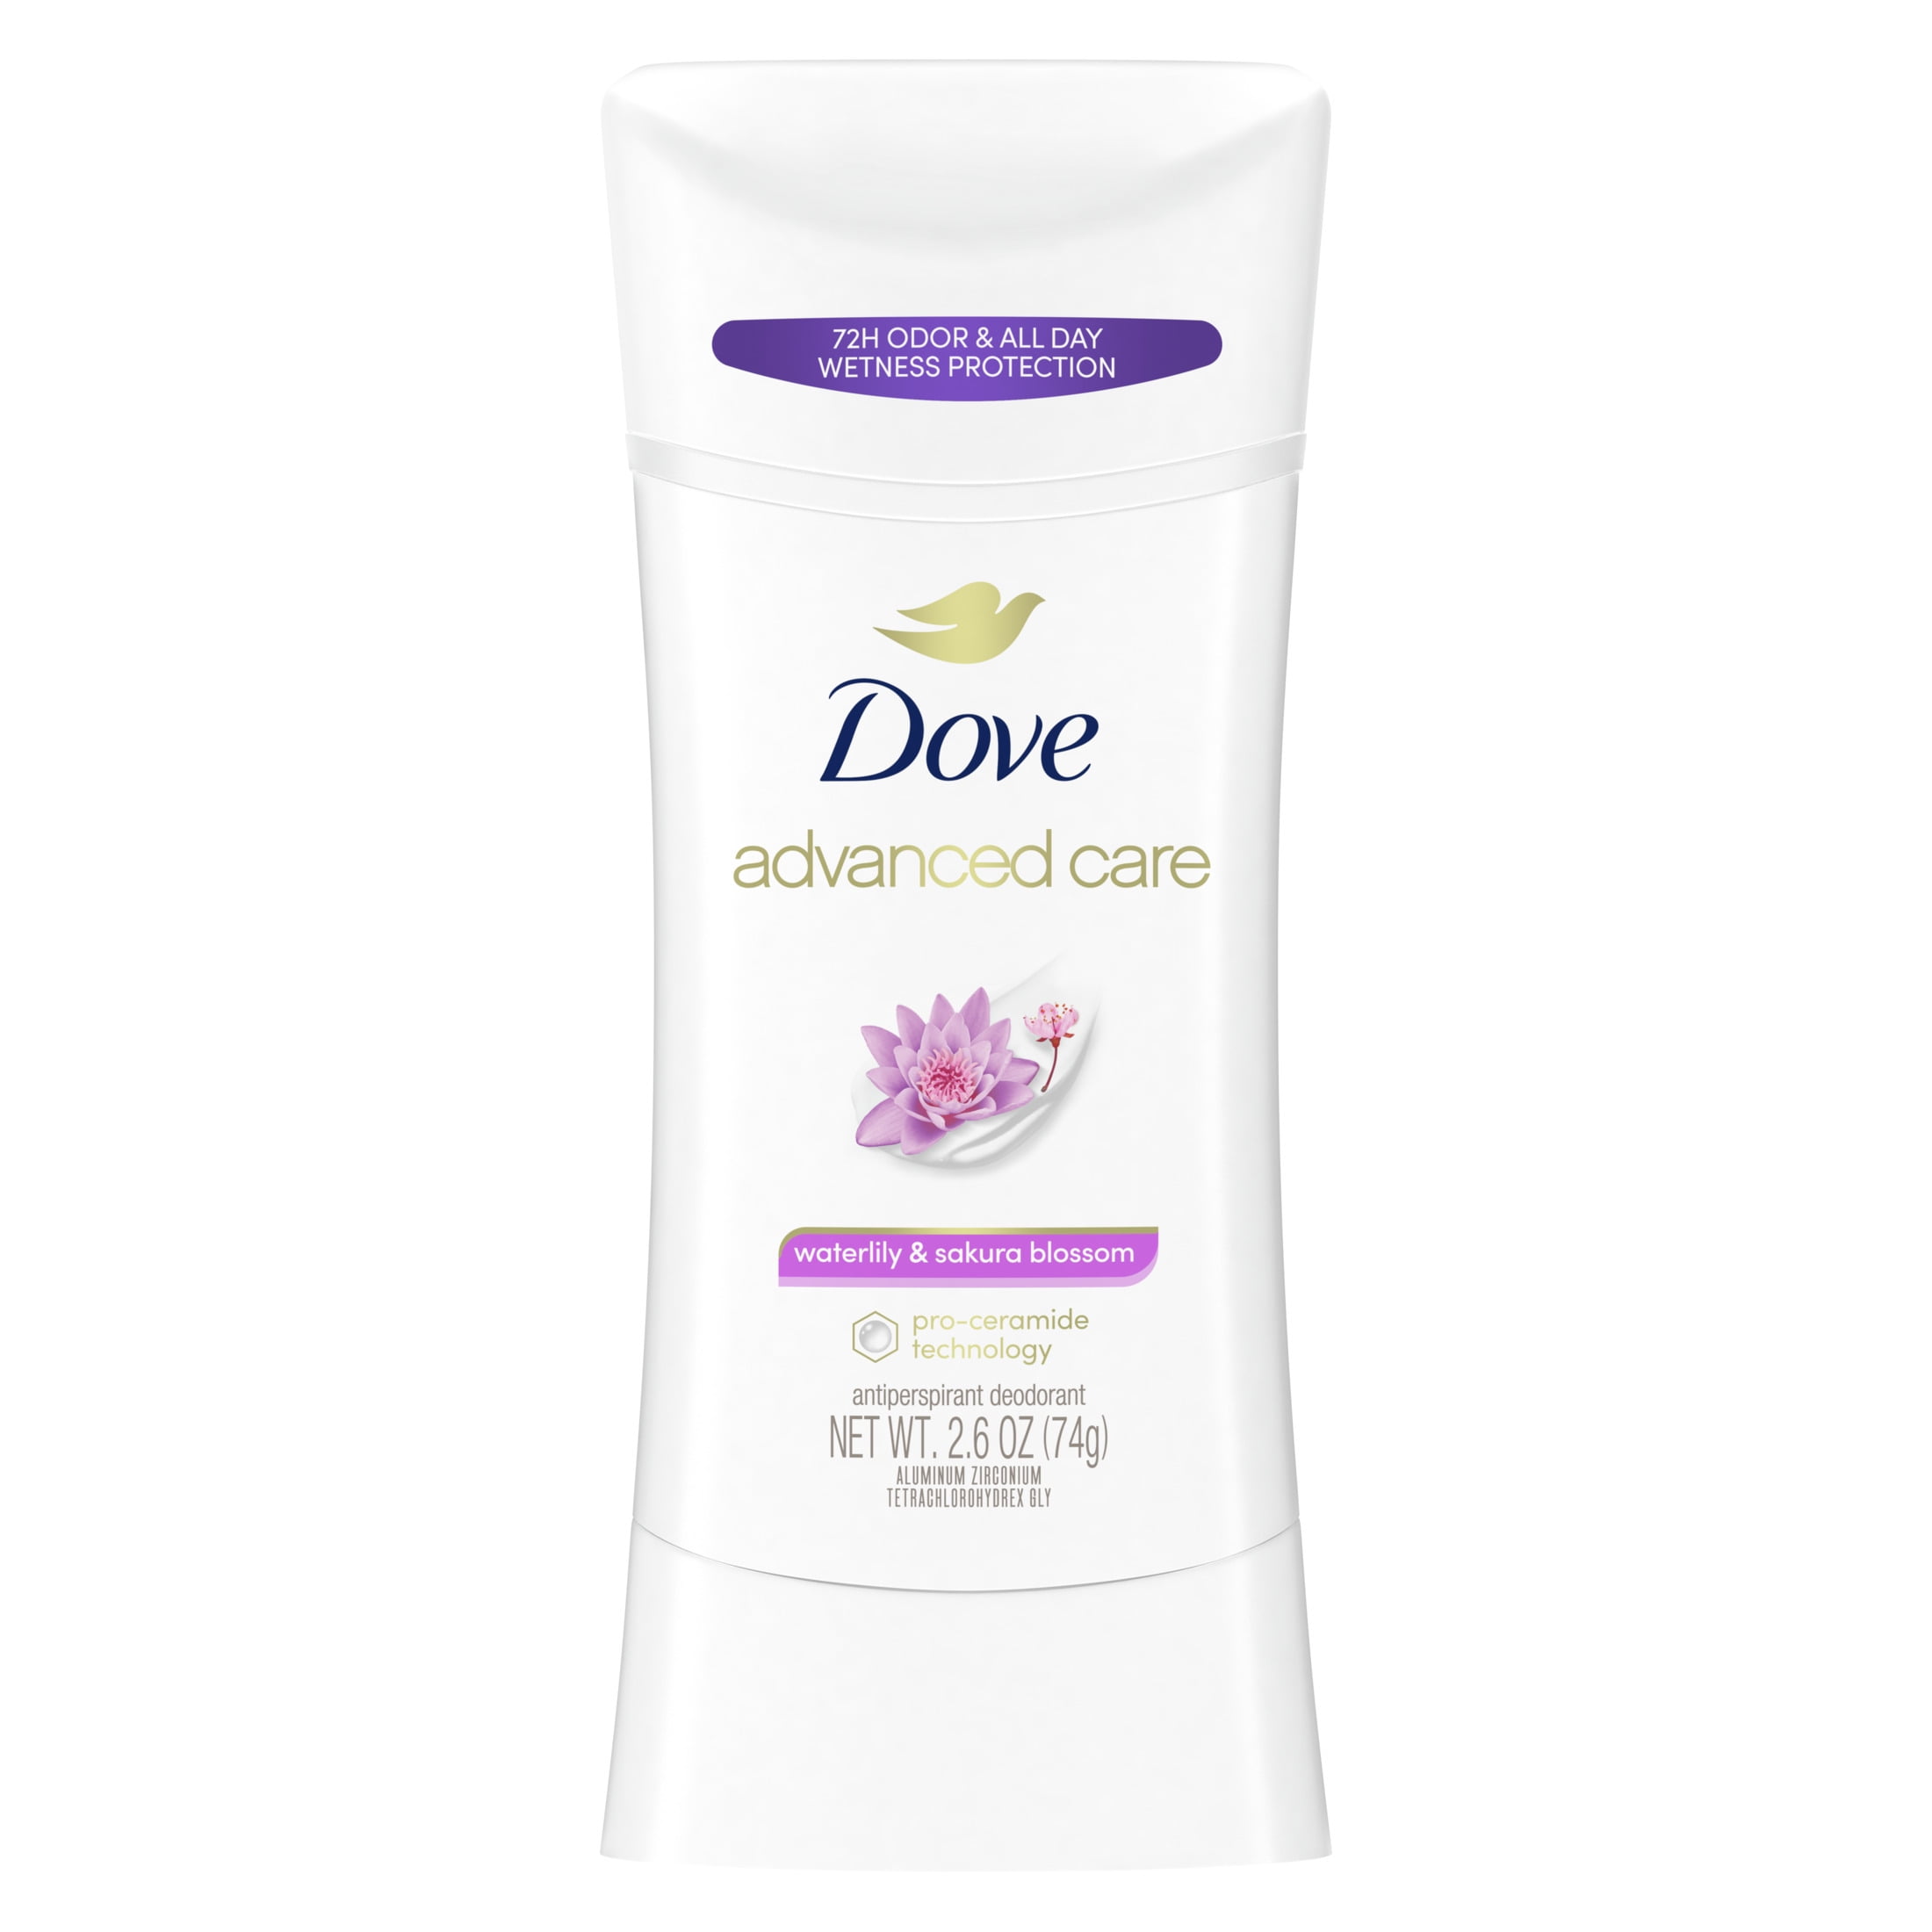 Dove Nourishing Secrets Waterlily & Sakura Blossom Dry Spray Antiperspirant  Deodorant, 3.8 oz - Kroger